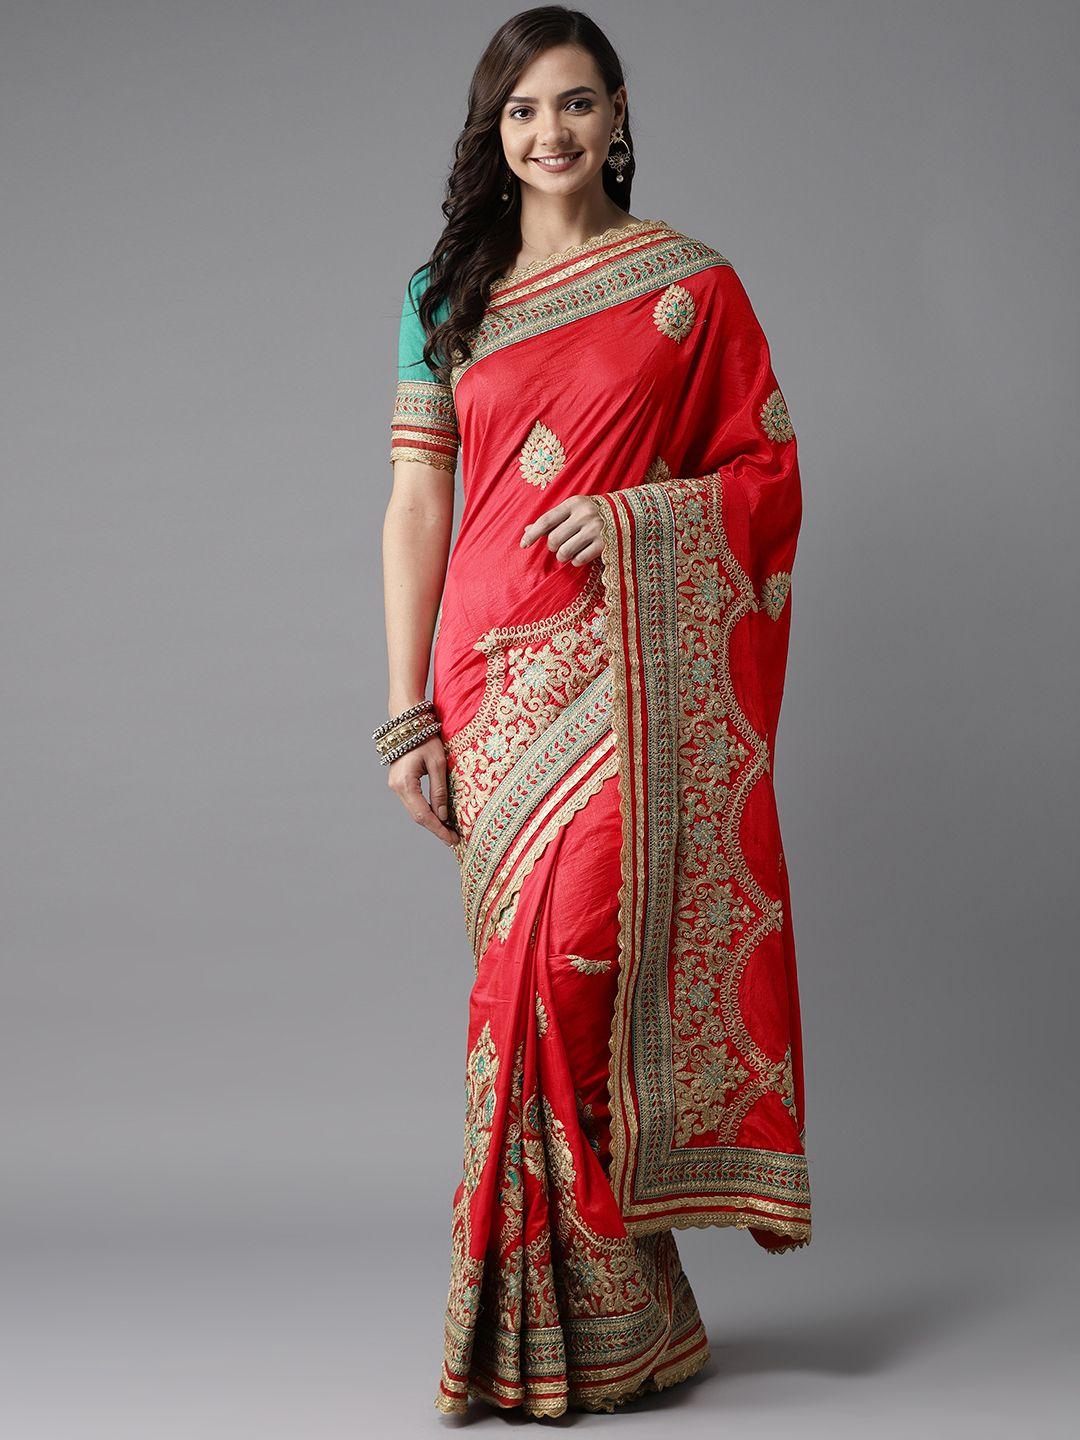 manohari red & golden embroidered saree